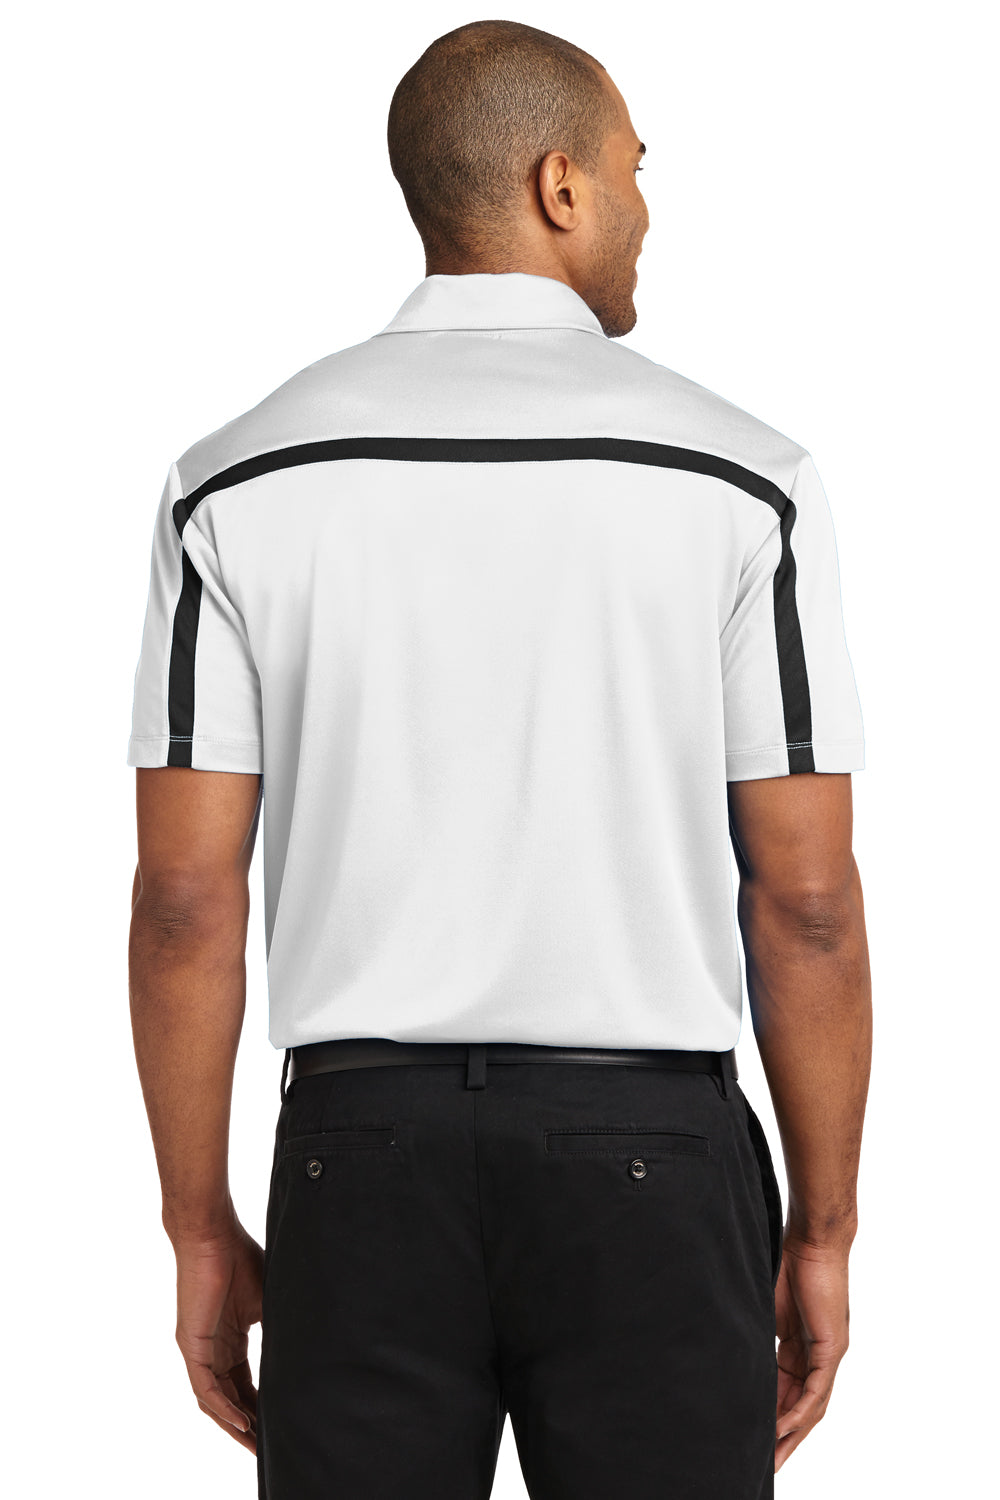 Port Authority K547 Mens Silk Touch Performance Moisture Wicking Short Sleeve Polo Shirt White/Black Back